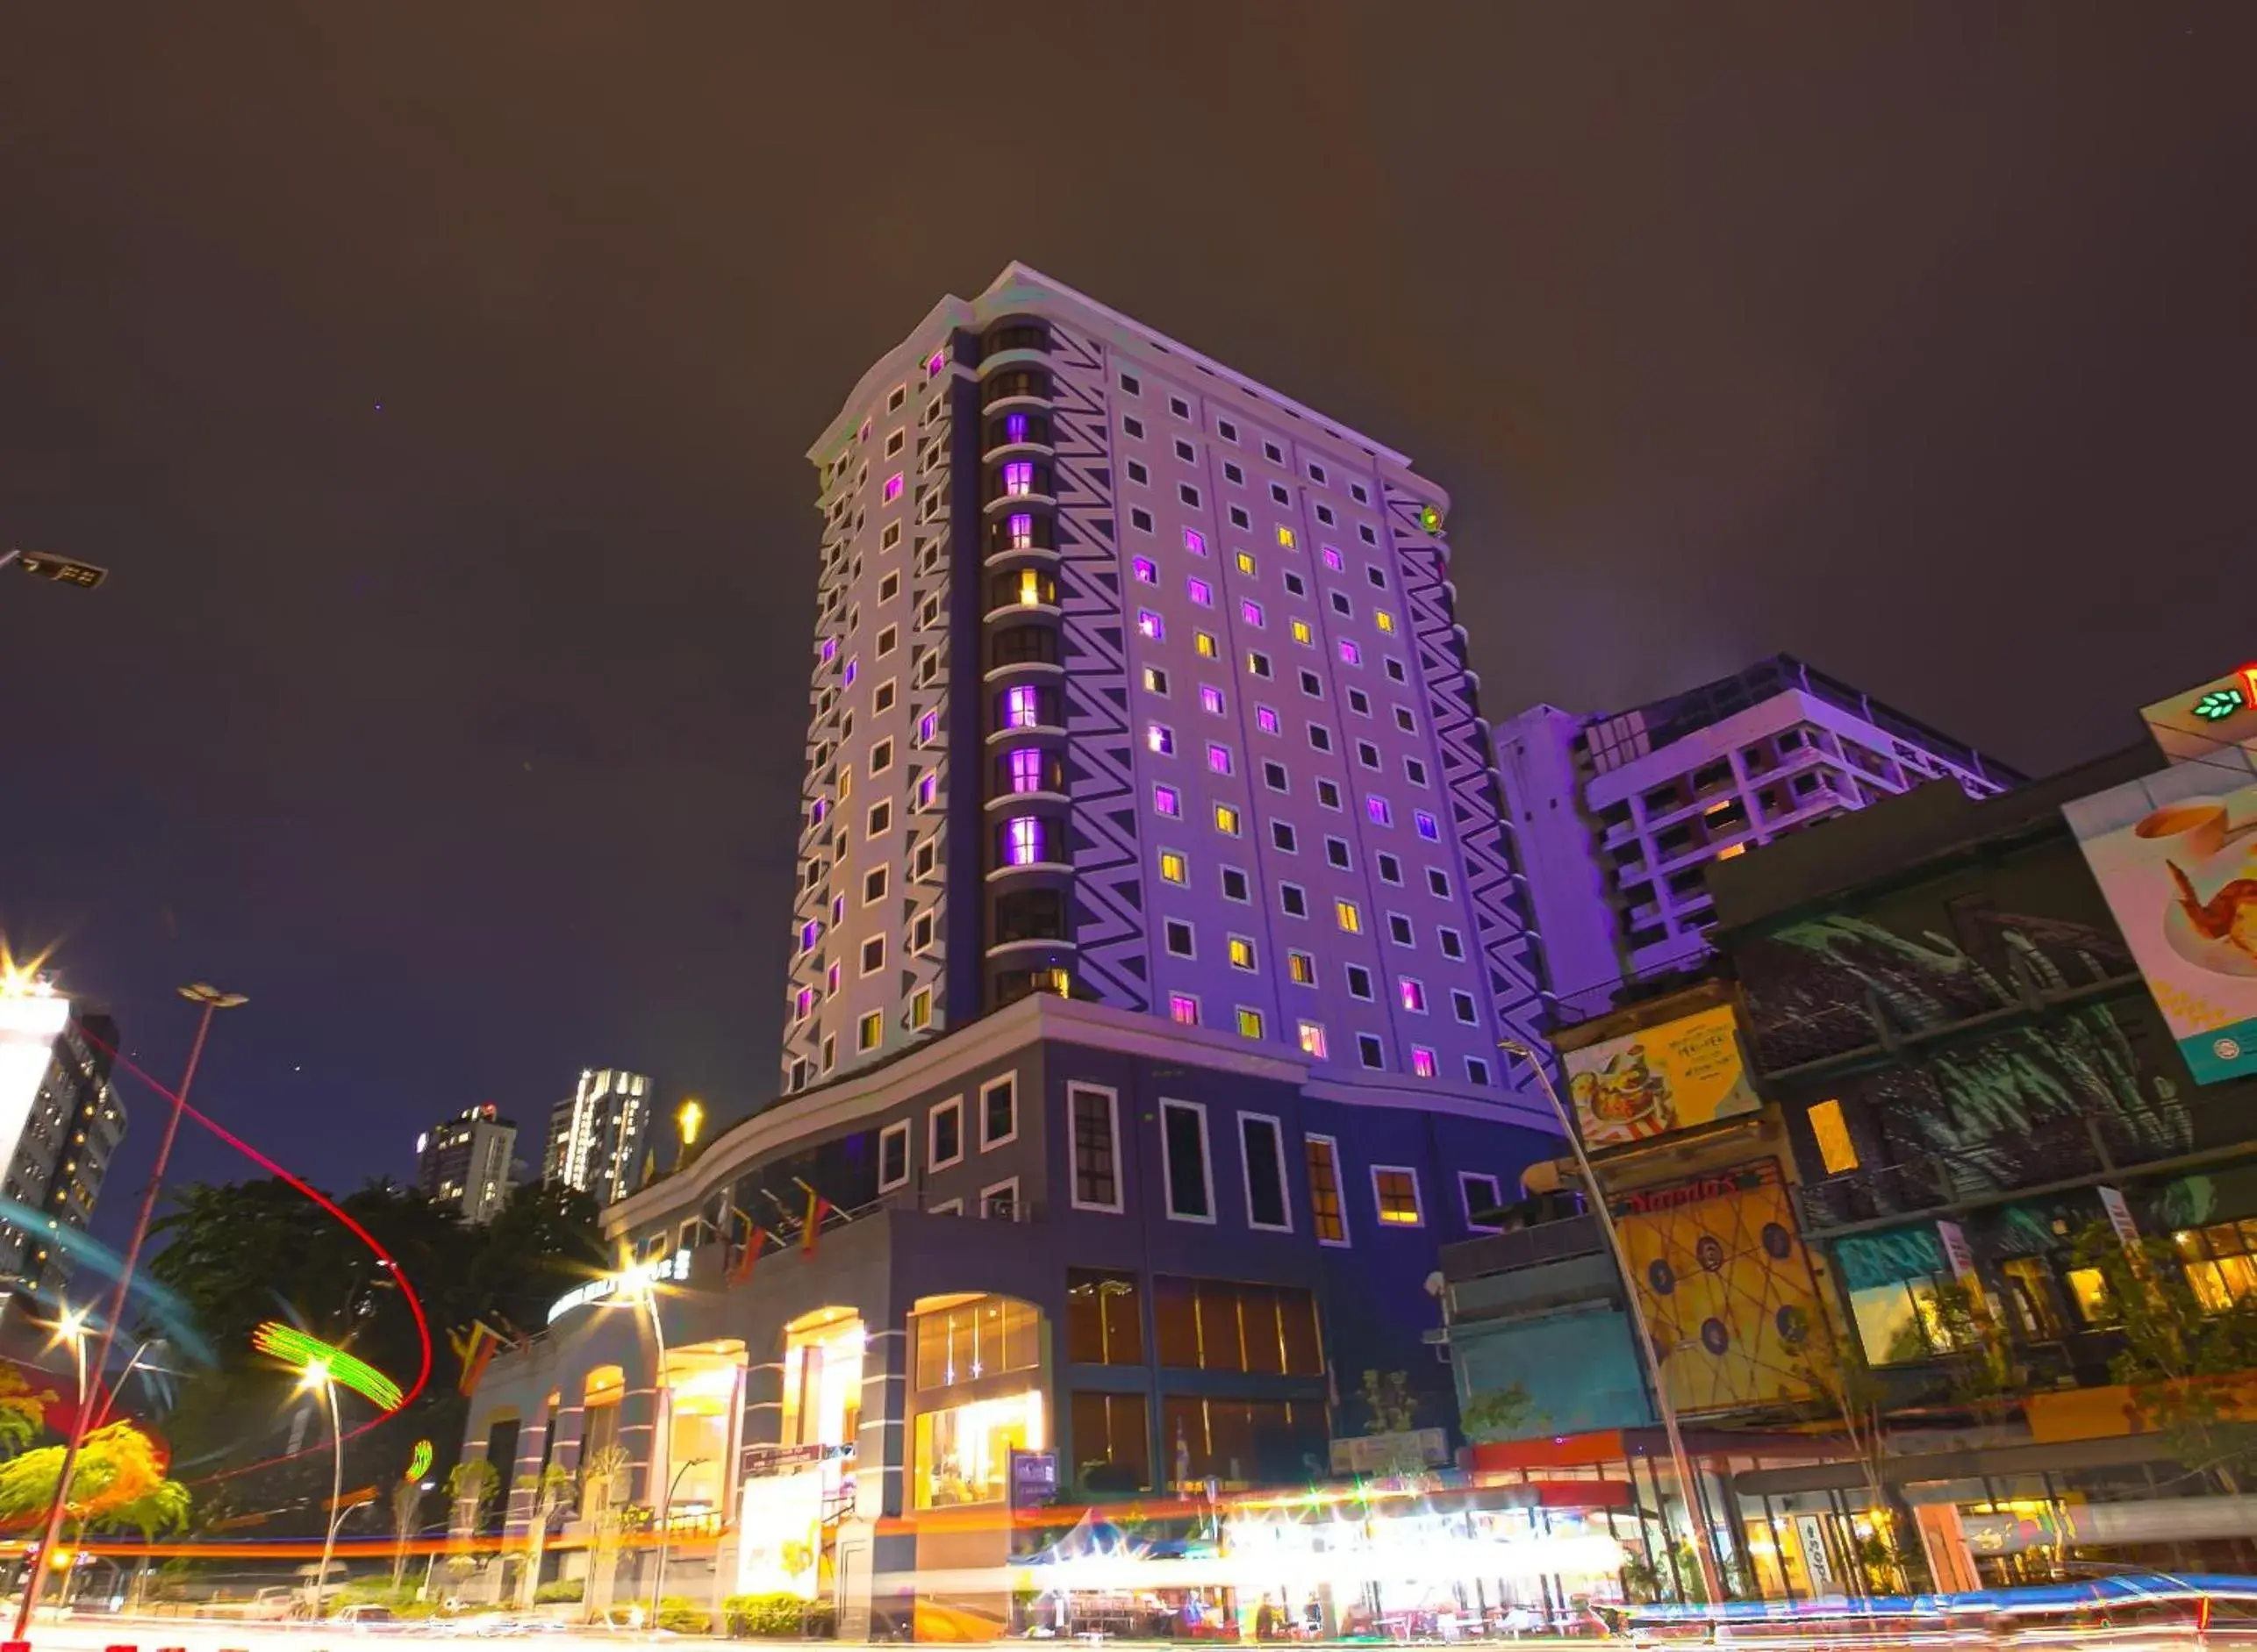 Property Building in AnCasa Hotel Kuala Lumpur by Ancasa Hotels & Resorts